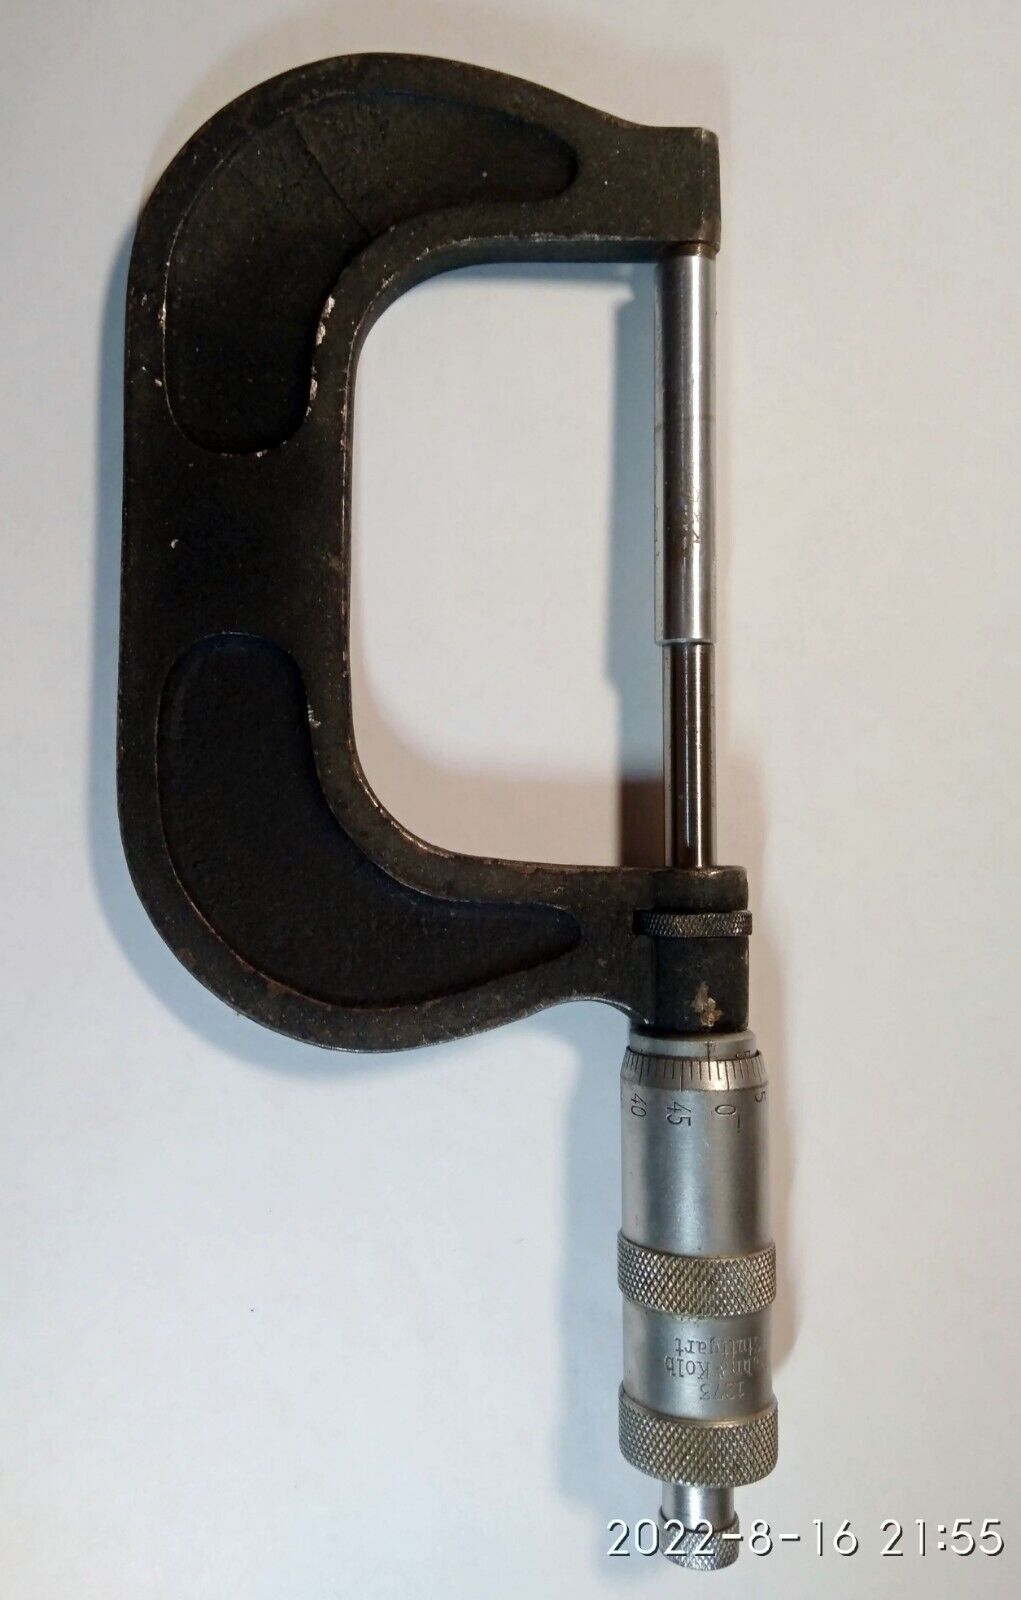 Vintage micrometer 50-75 mm, 0,01 mm, Hahn&Kolb, Germany works great calibrated